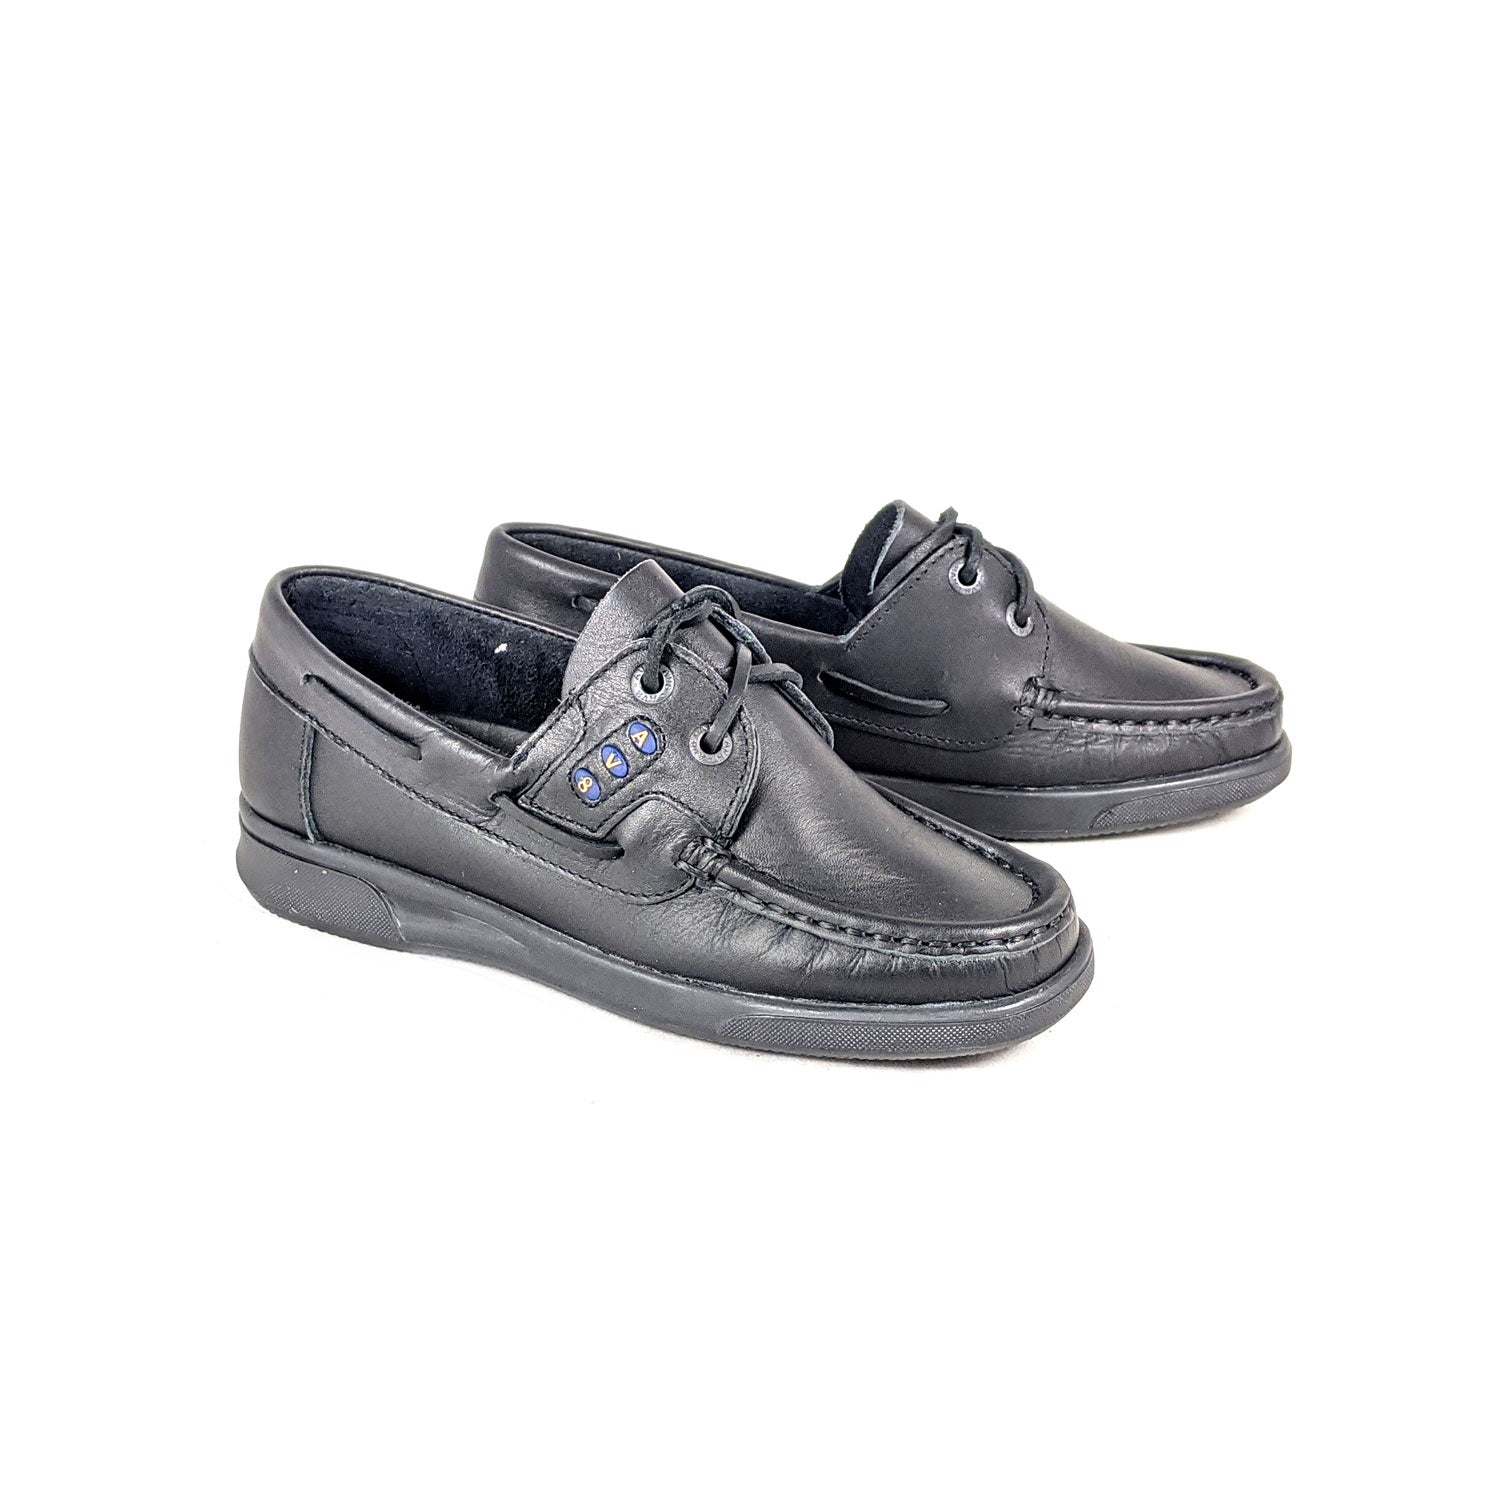 Dubarry Kapley Laced Av8 Shoe - Black 1 Shaws Department Stores